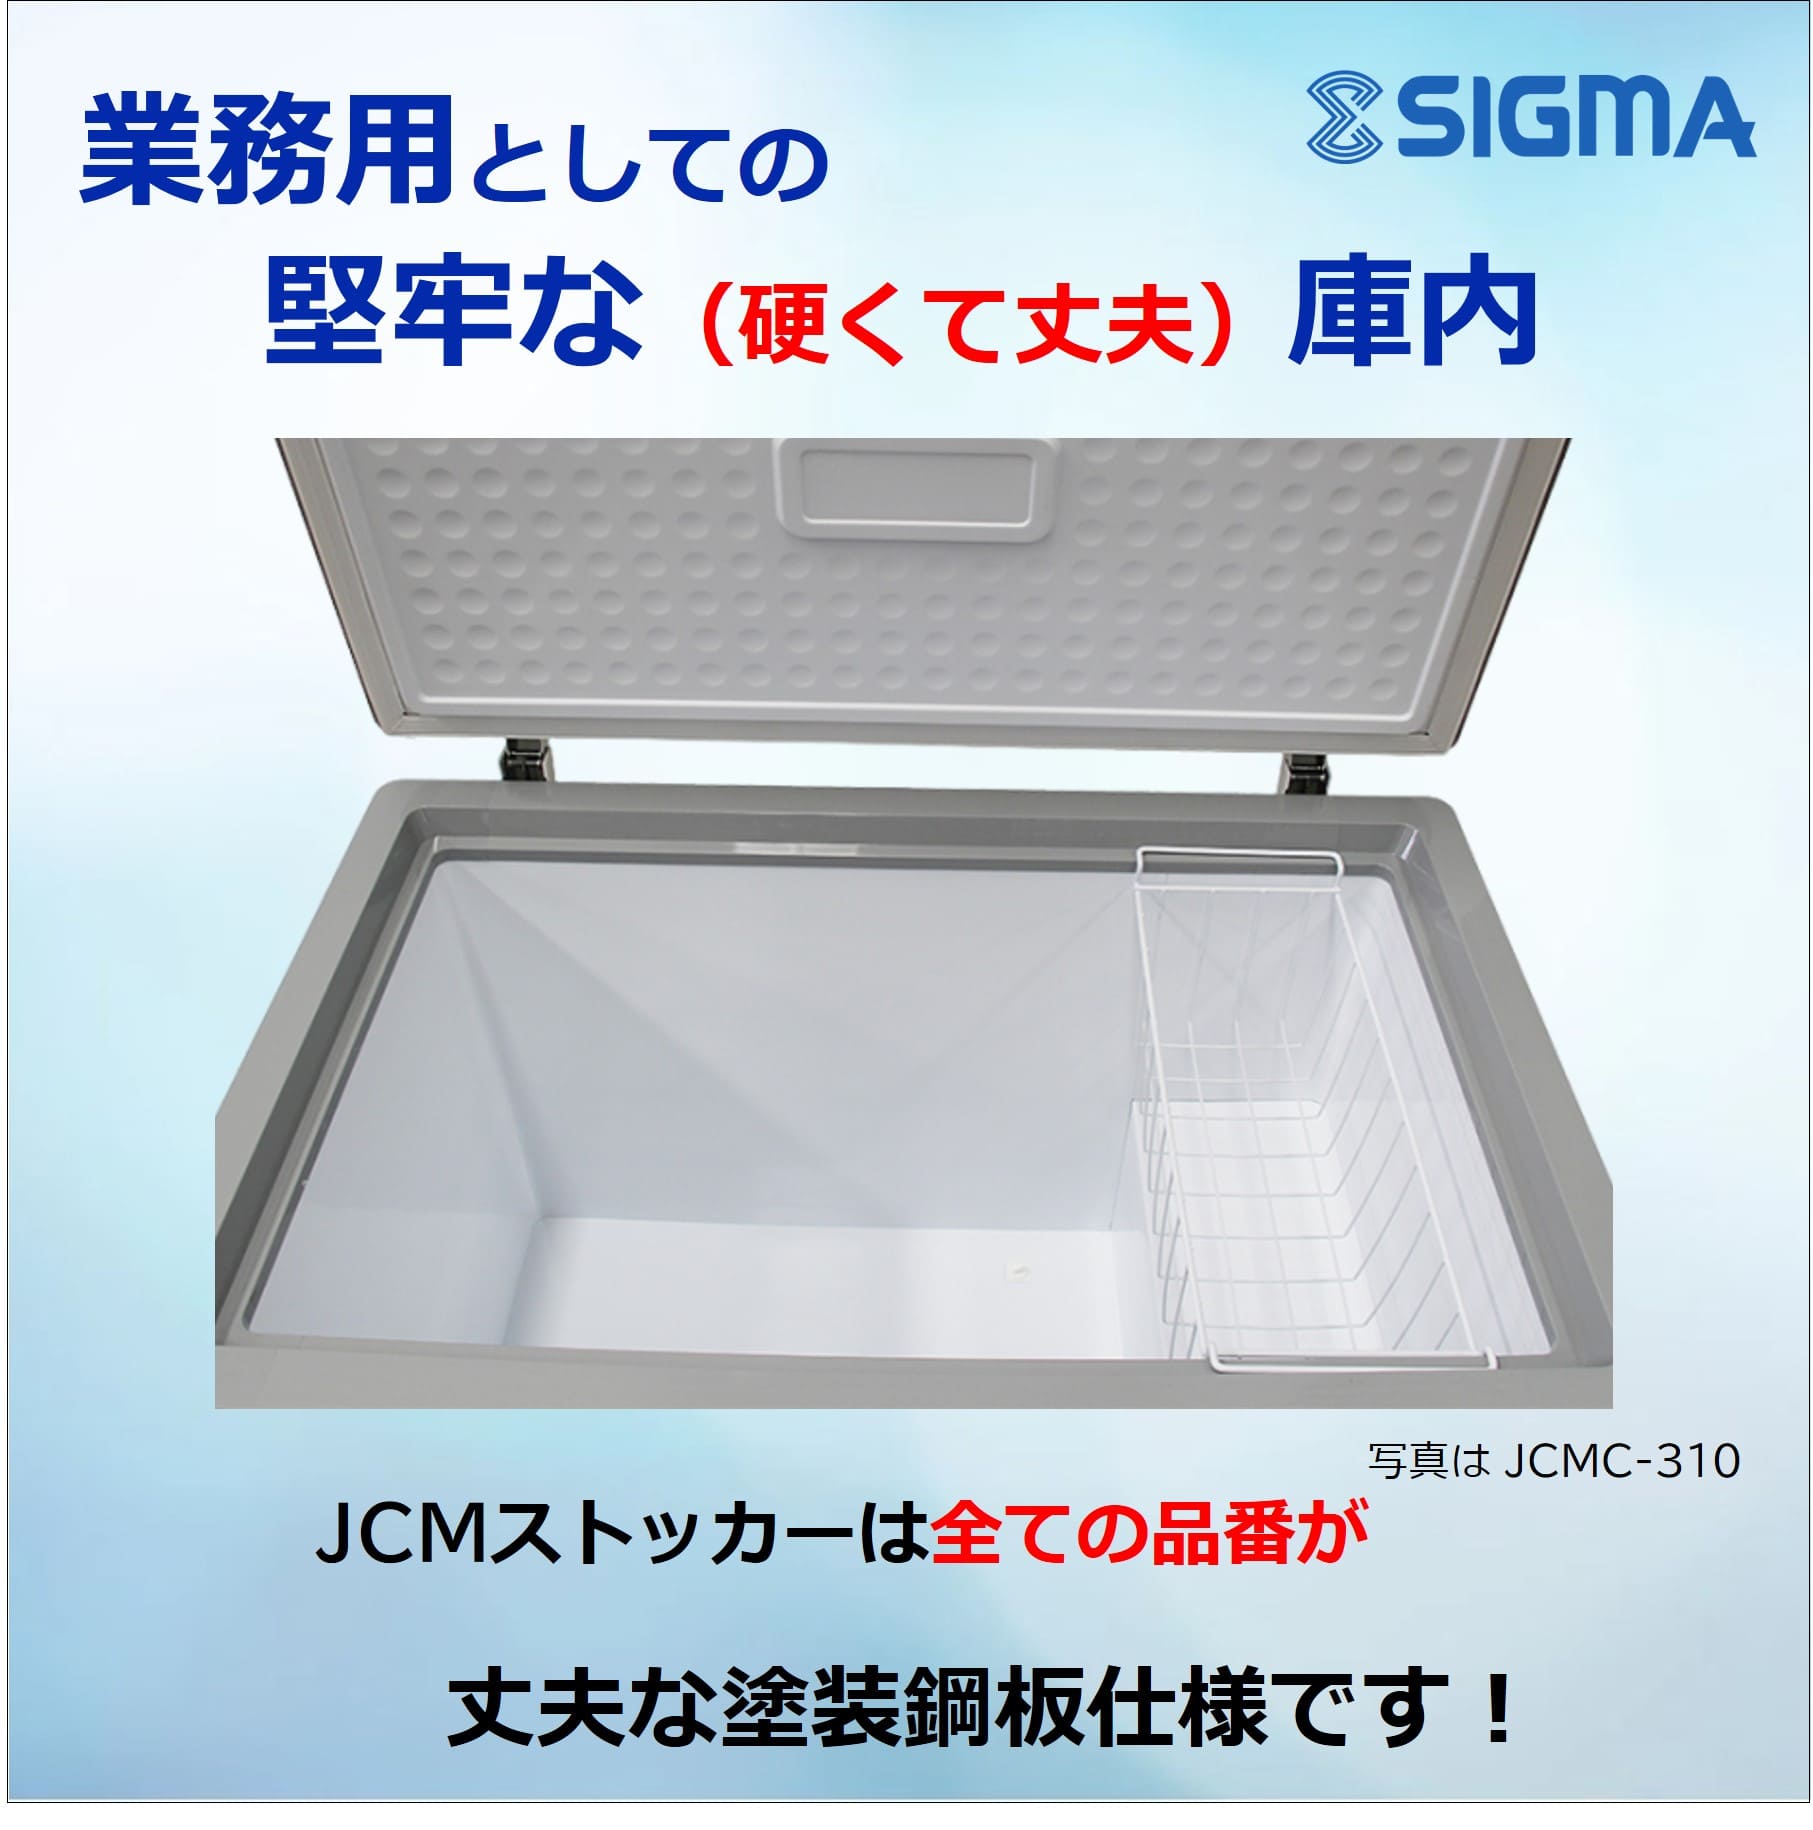 JCMC-266 冷凍ストッカー／
幅1184×奥行600×高さ840mm